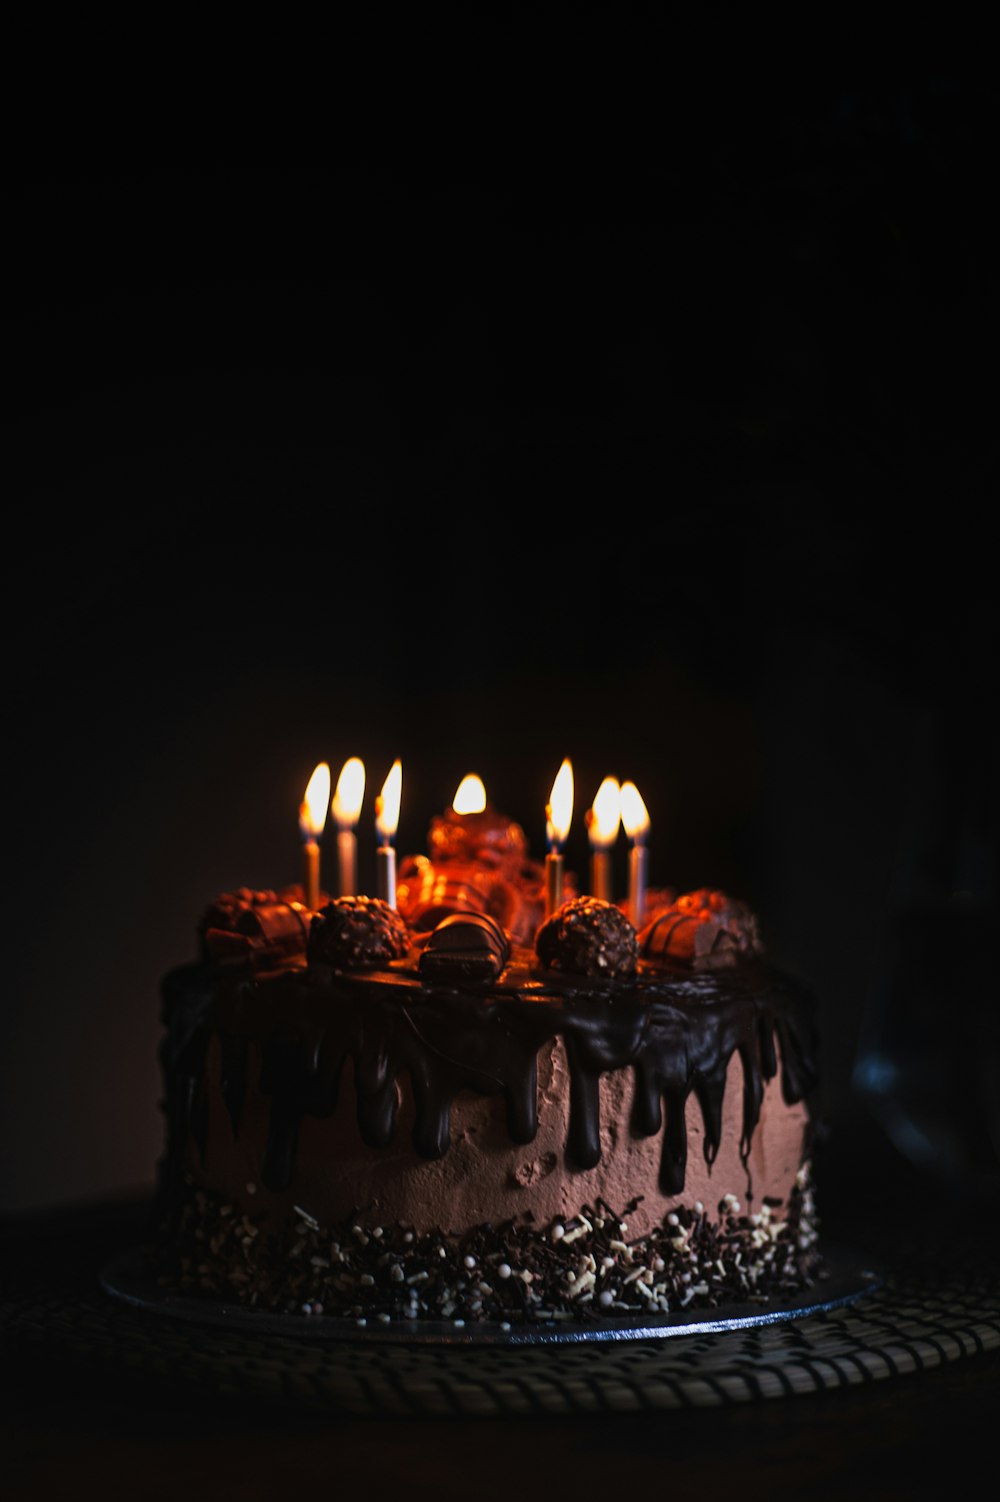 lighted candles on black metal stand photo – Free Dessert Image on Unsplash